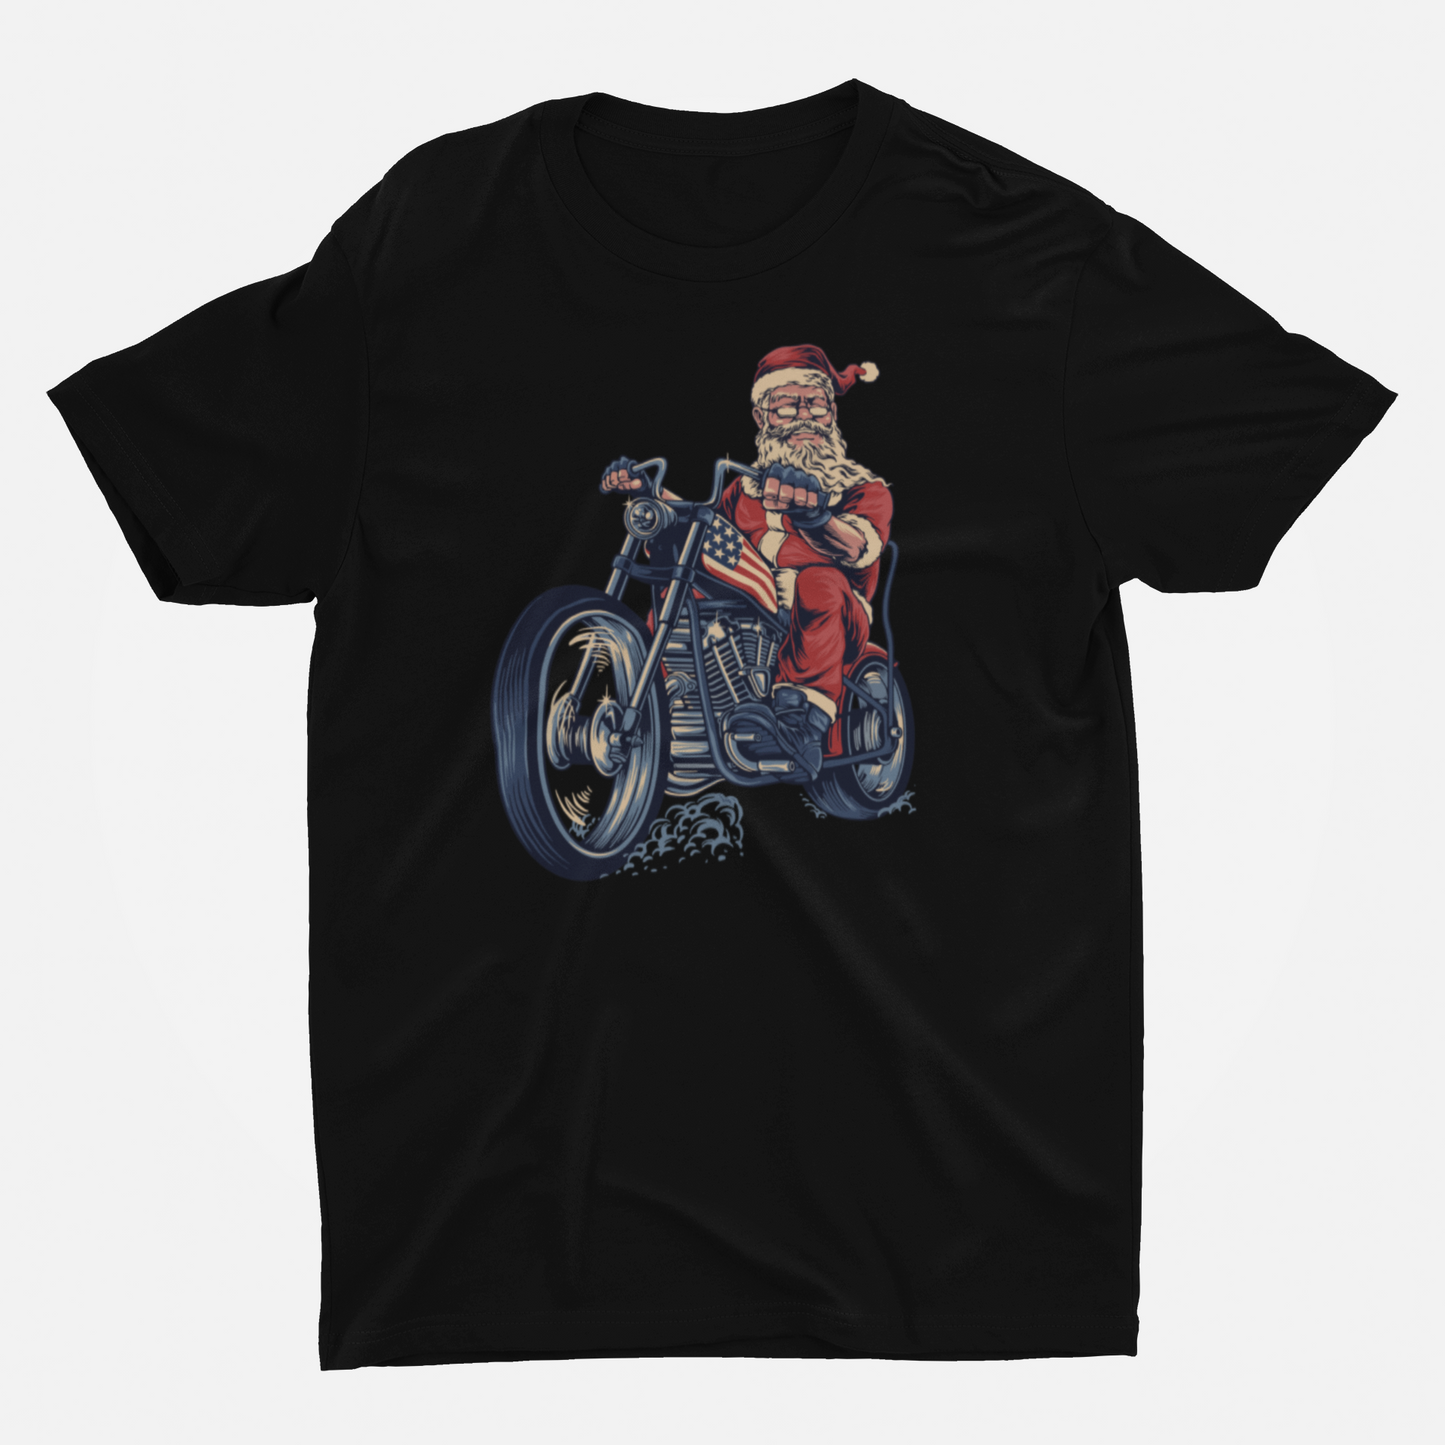 Riding Santa Black Round Neck T-Shirt for Men.